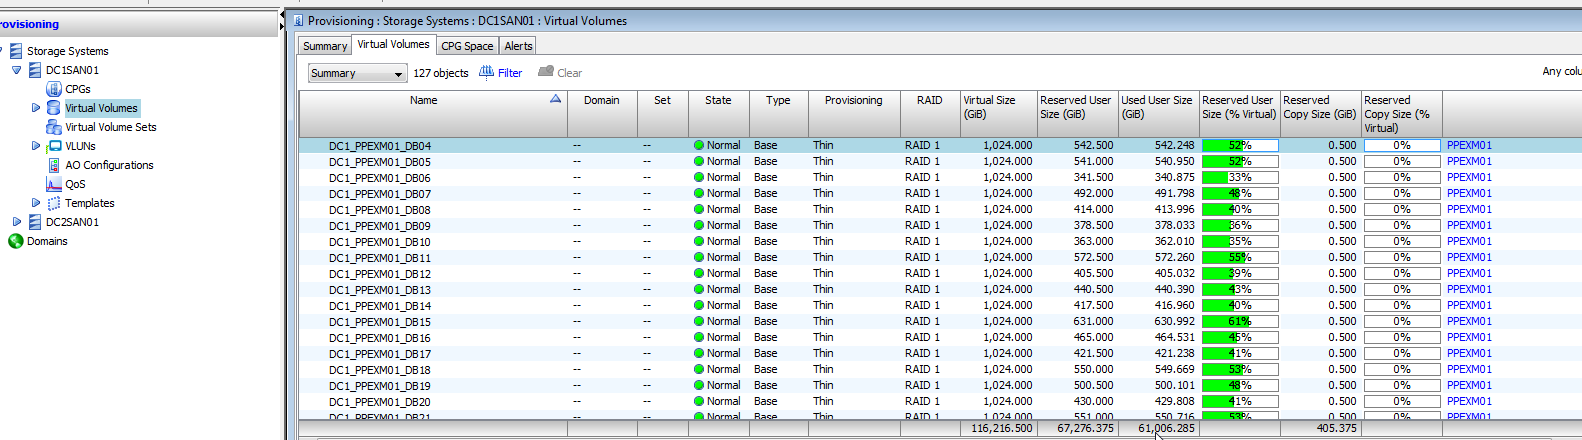 3PAR Virtual volume summary total size.png